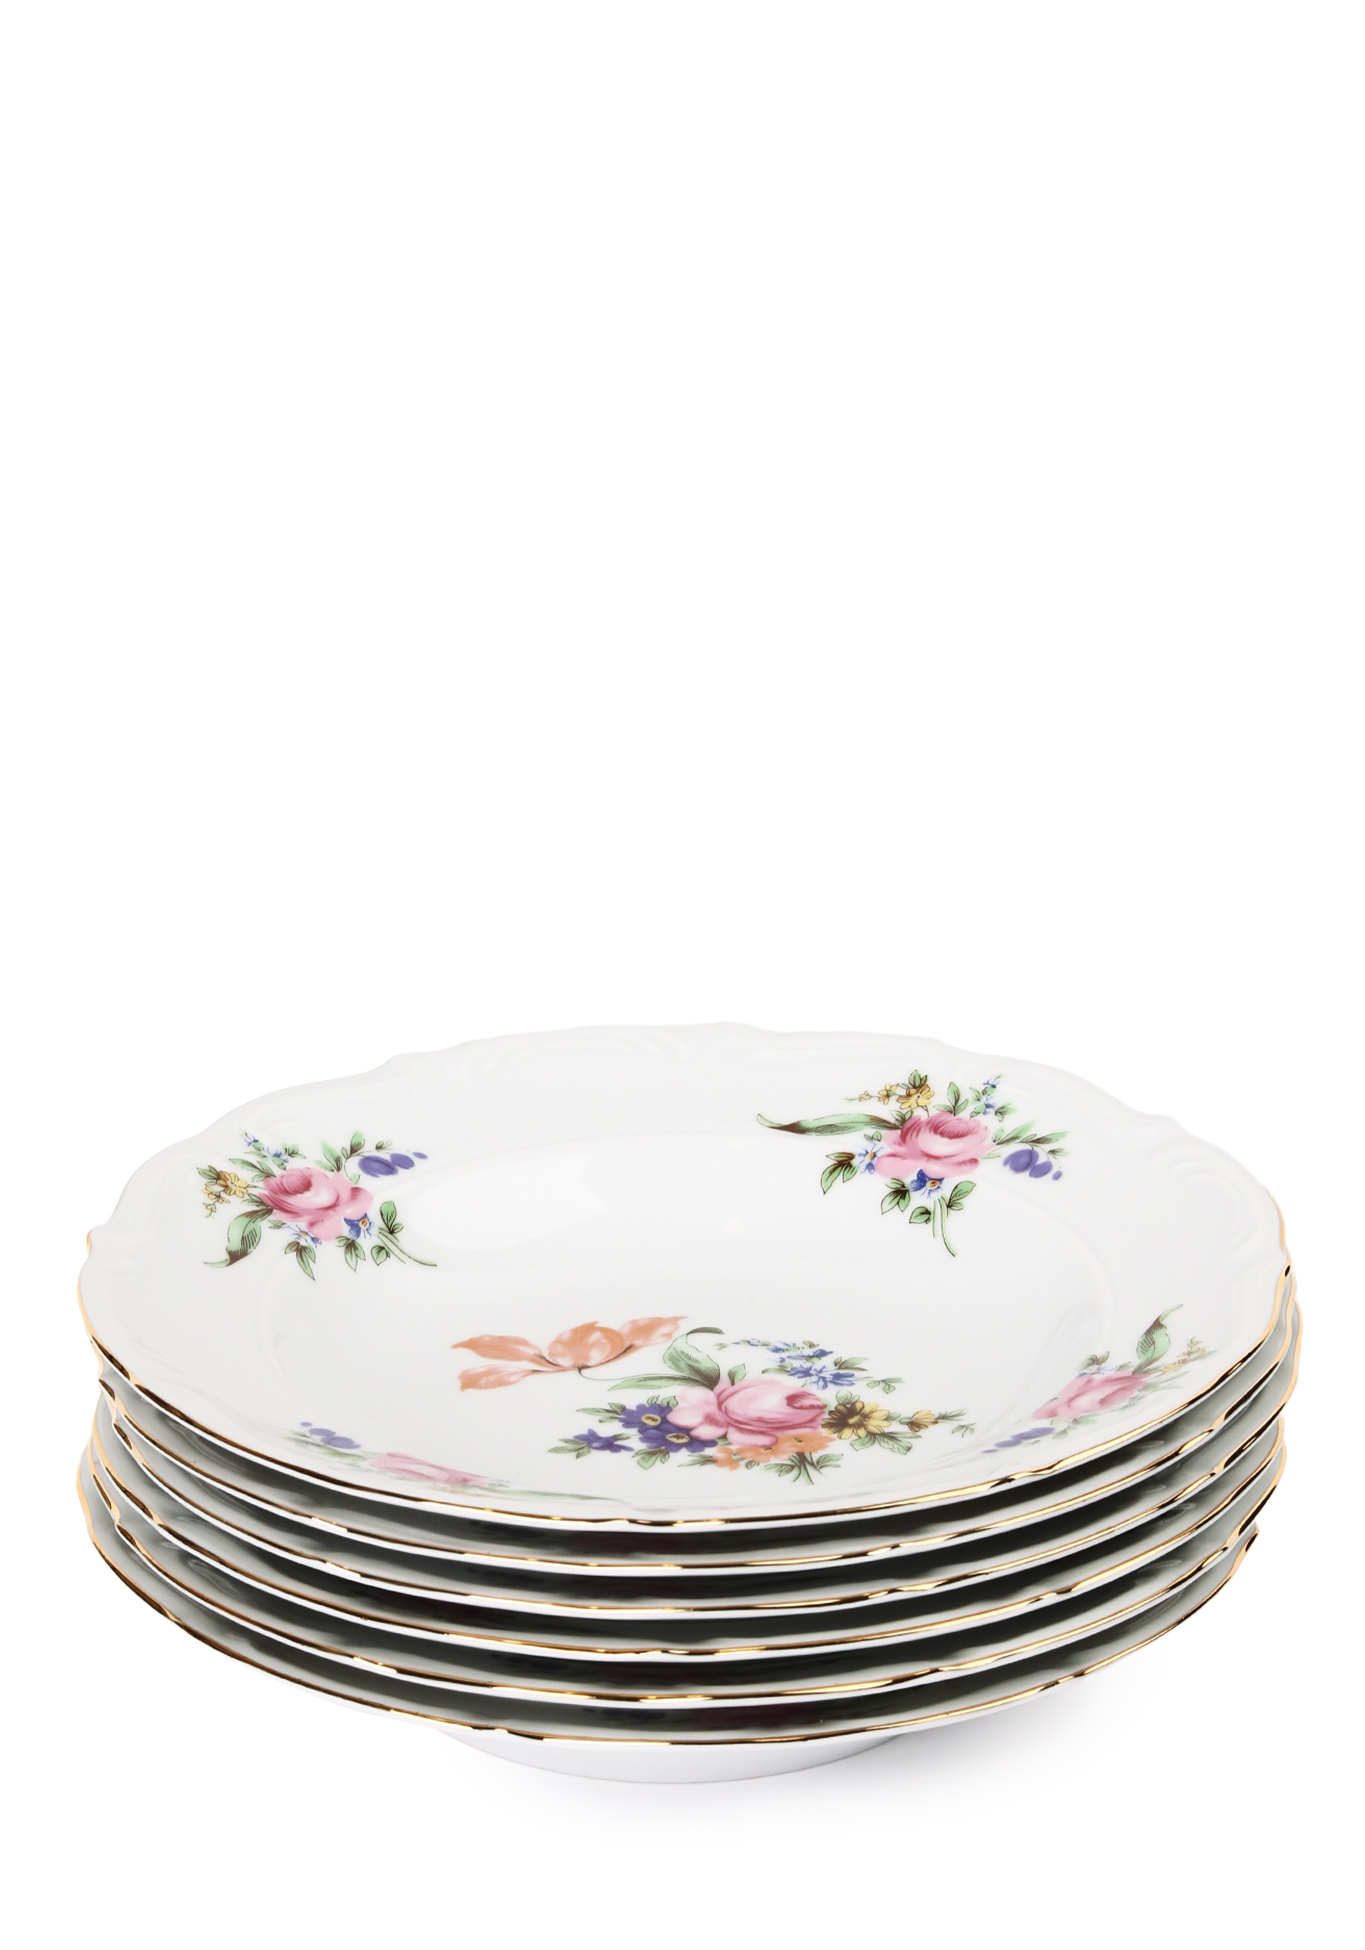 Набор глубоких тарелок из чешского фарфора Repast, цвет белый